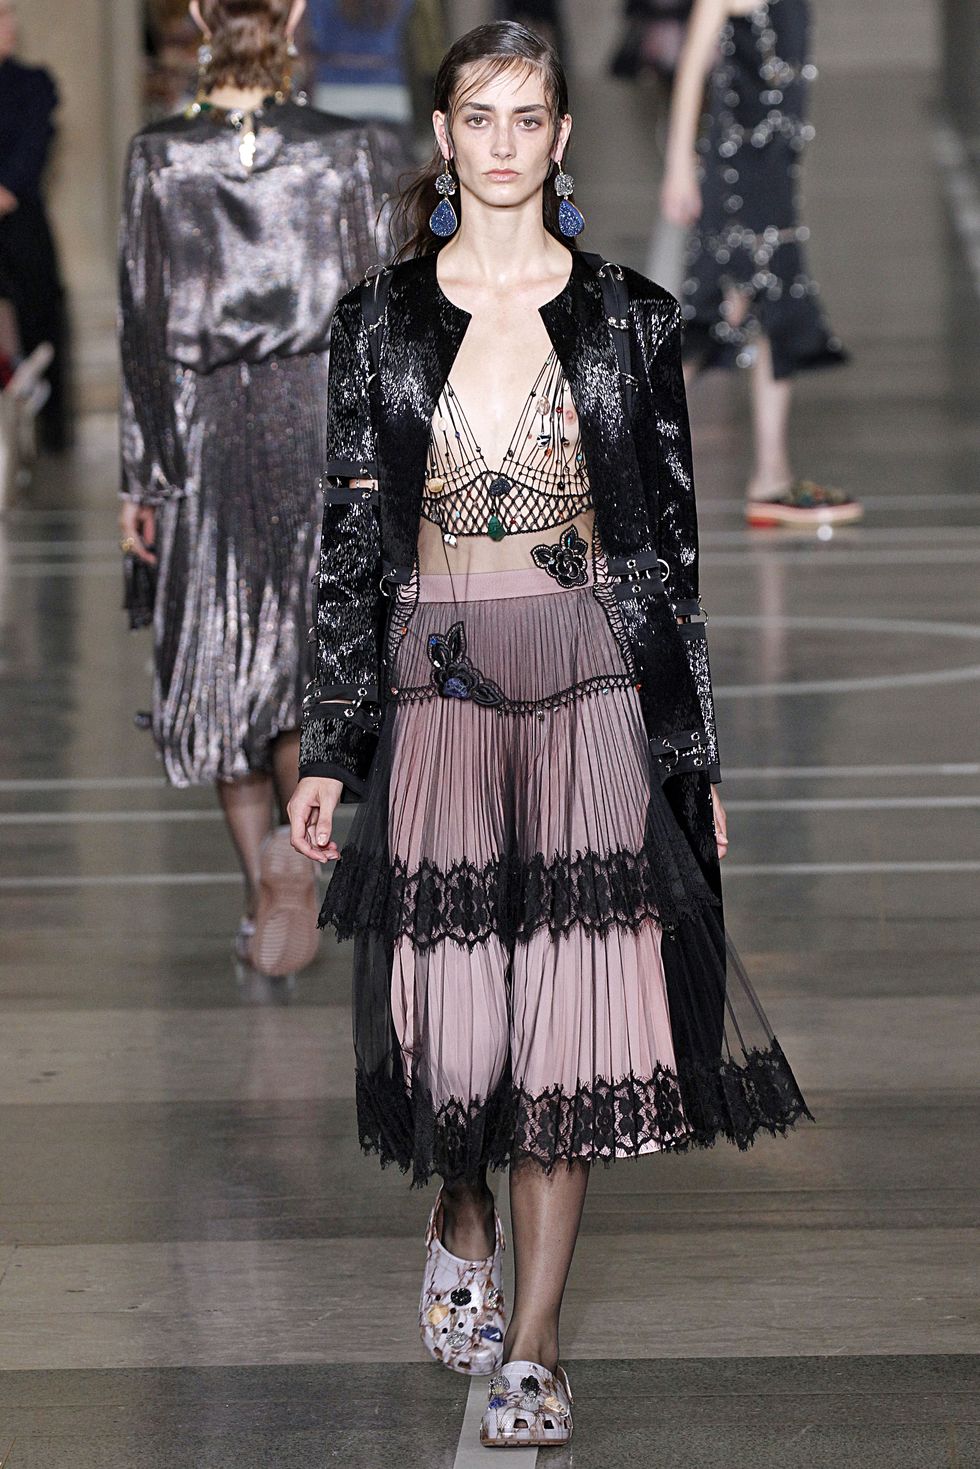 Horrifying bejeweled crocs hit the runway at London Fashion Week